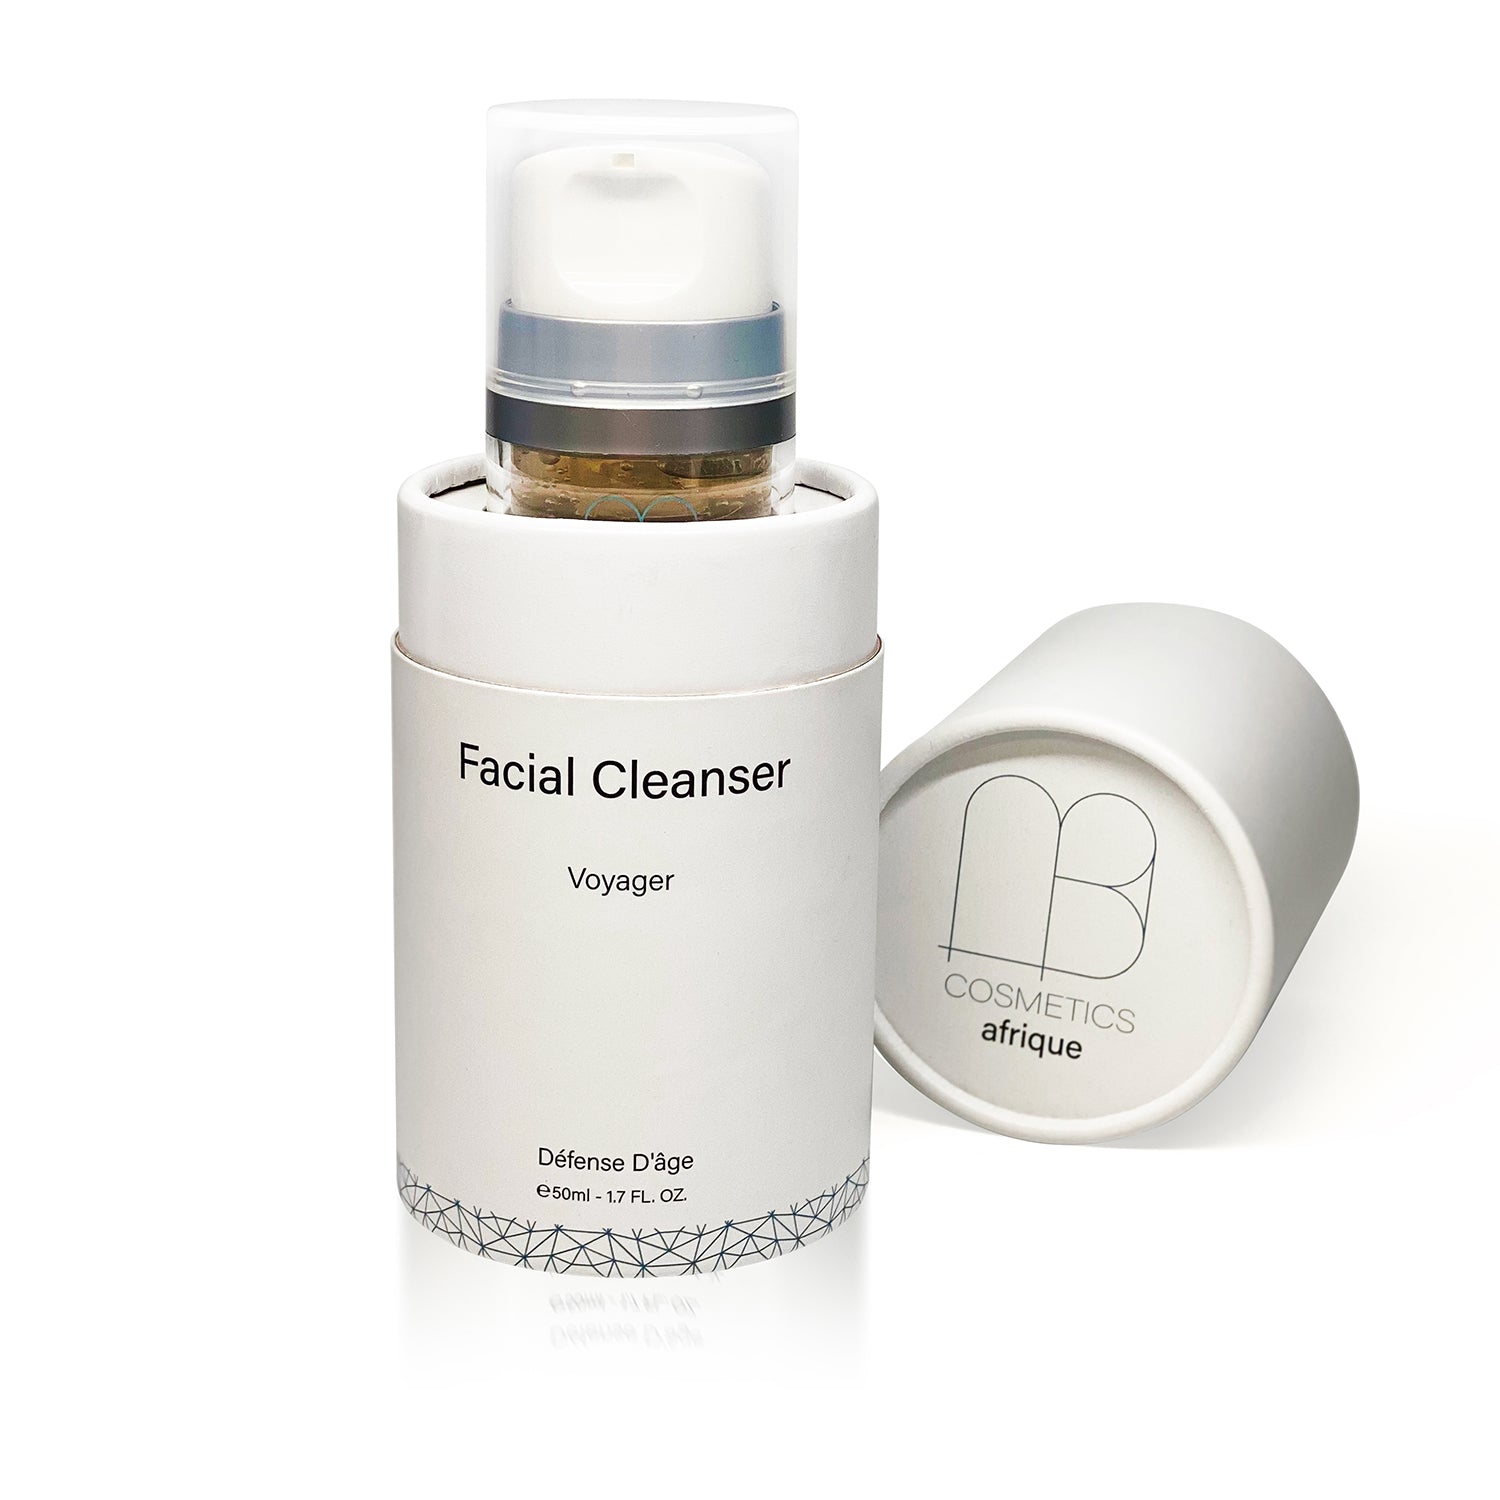 Facial Cleanser (Voyager) Balance PH. Formula Défense D'âge